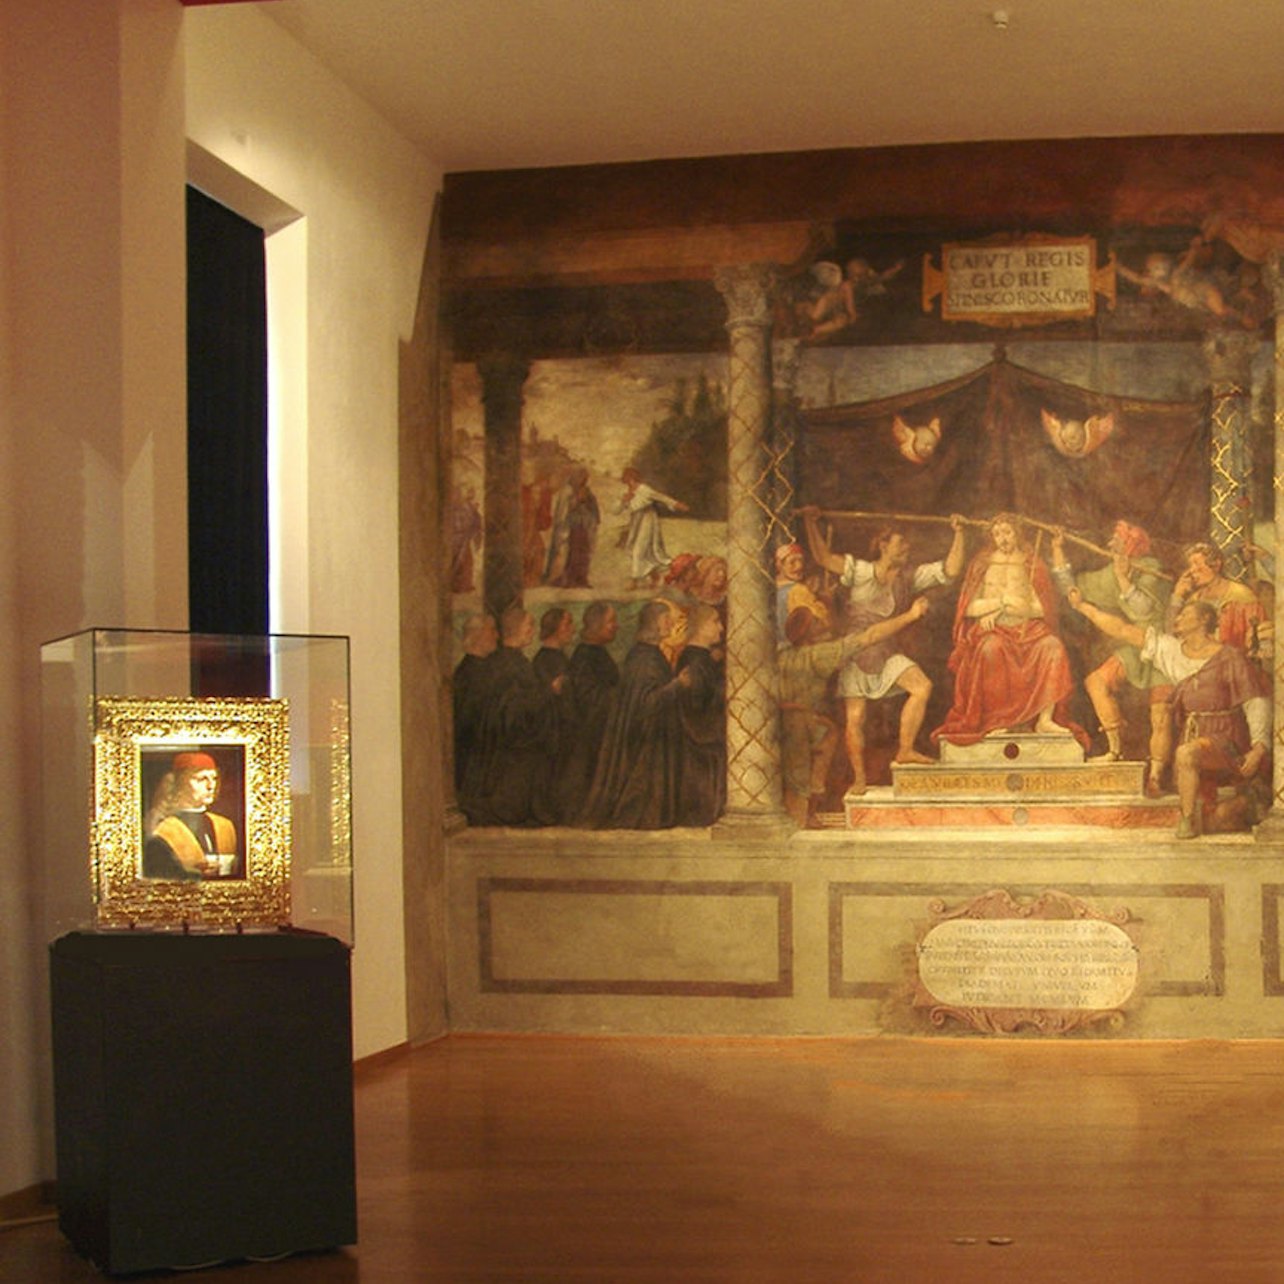 Pinacoteca Ambrosiana - Accommodations in Milan